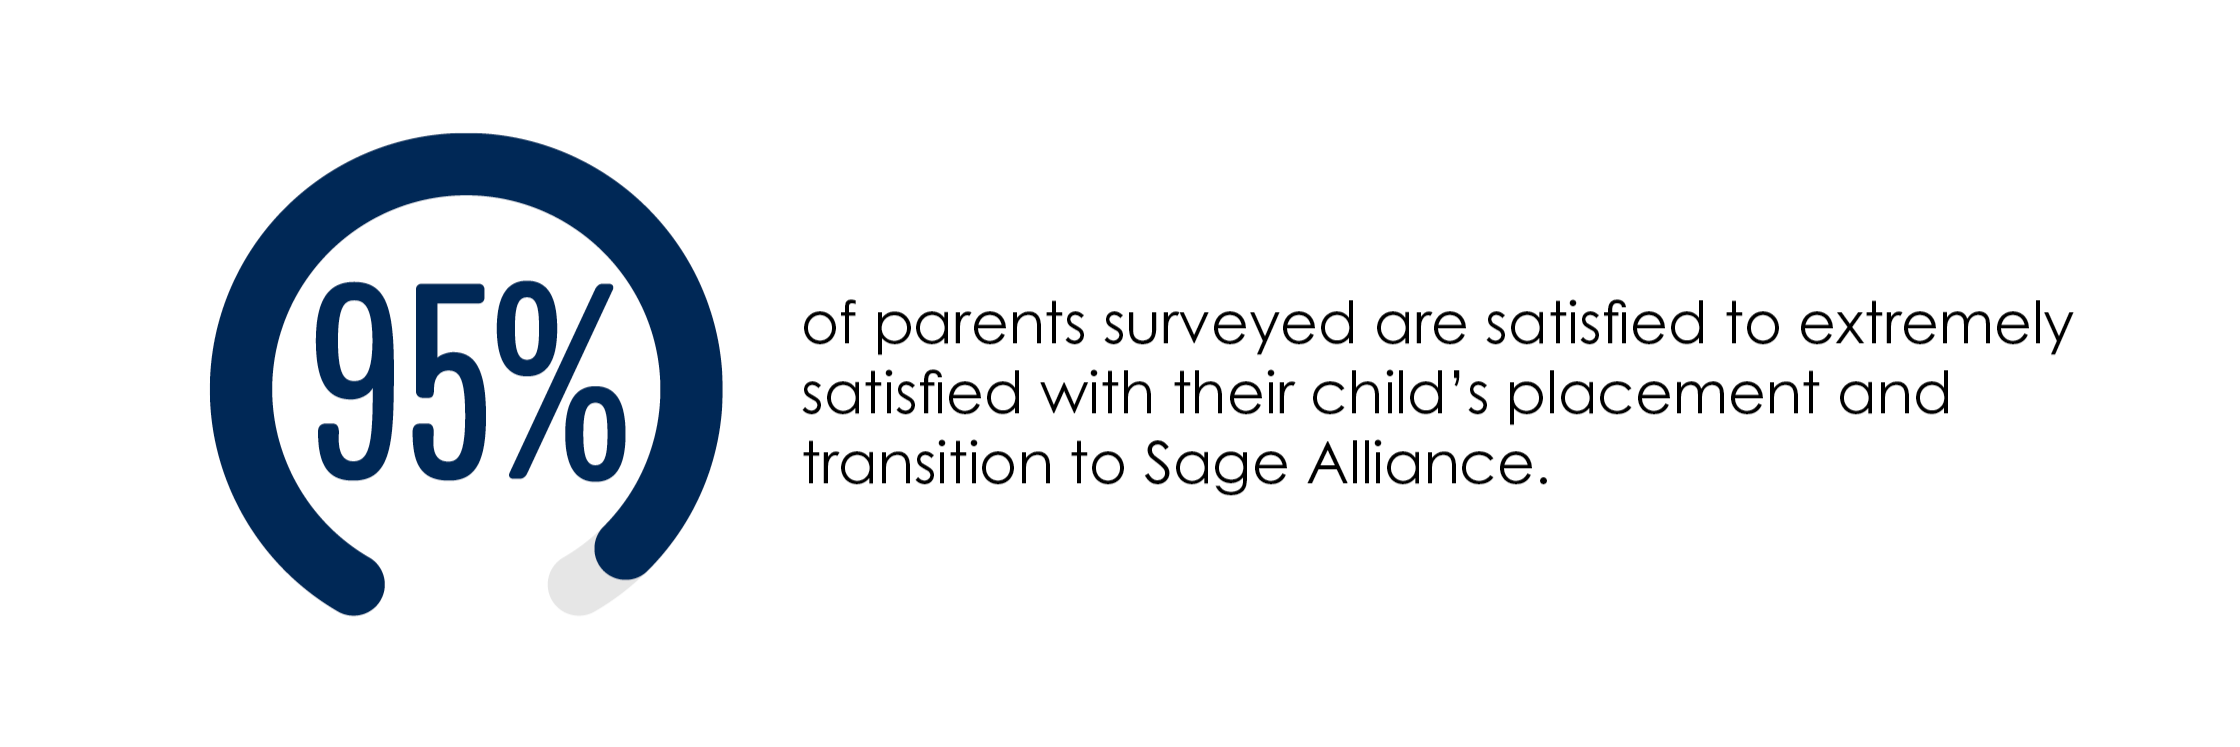 Parent satisfaction infographic